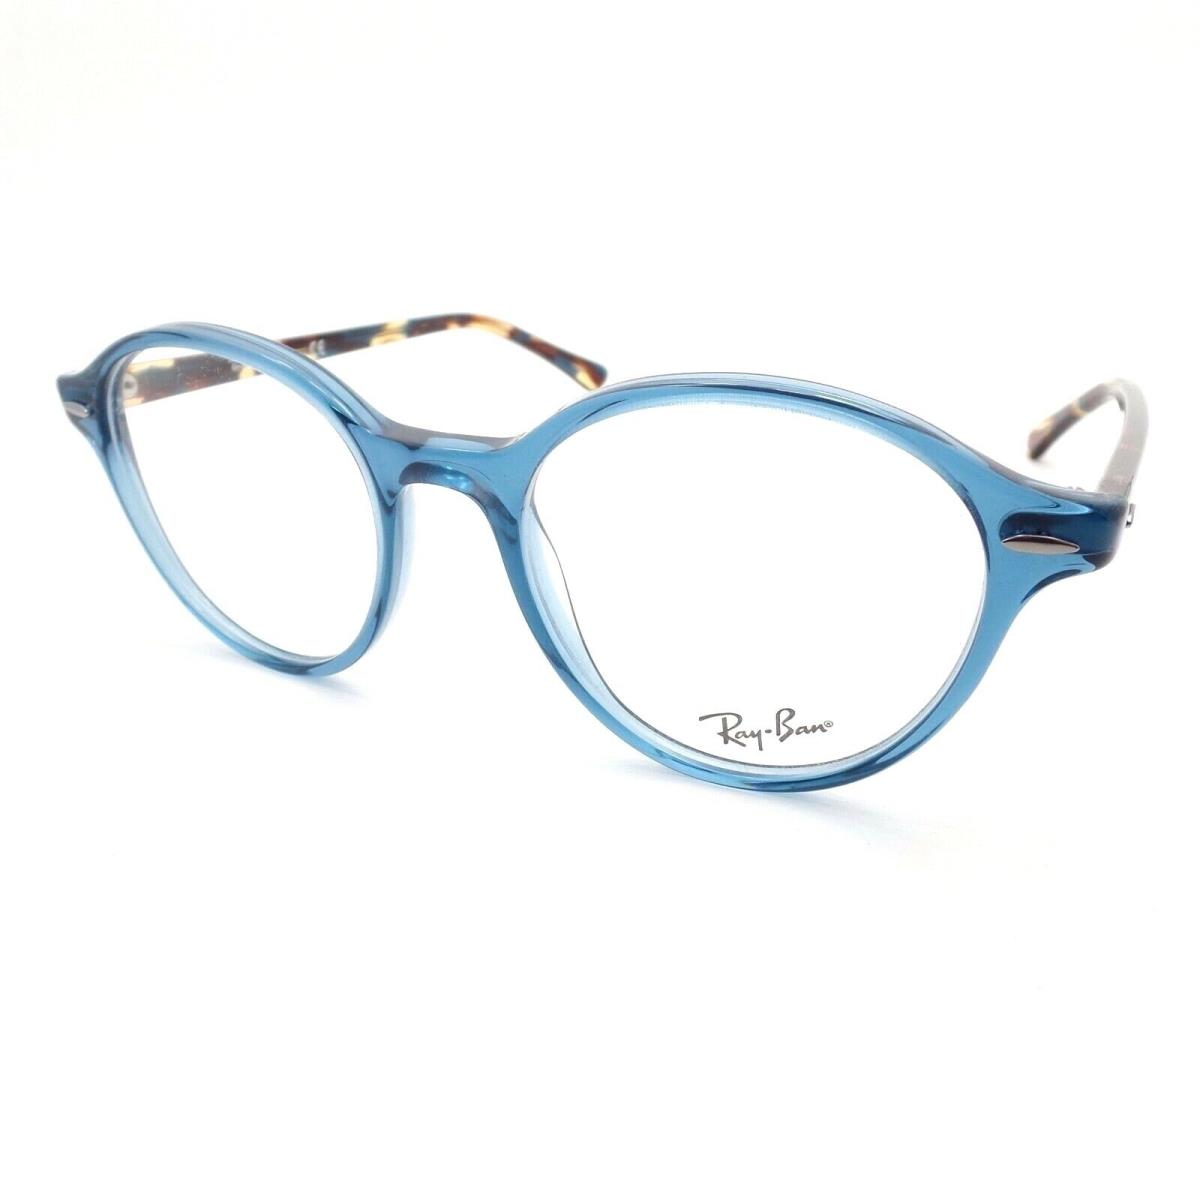 Ray Ban 7118 8022 50mm Transparent Blue Eyeglass Frame